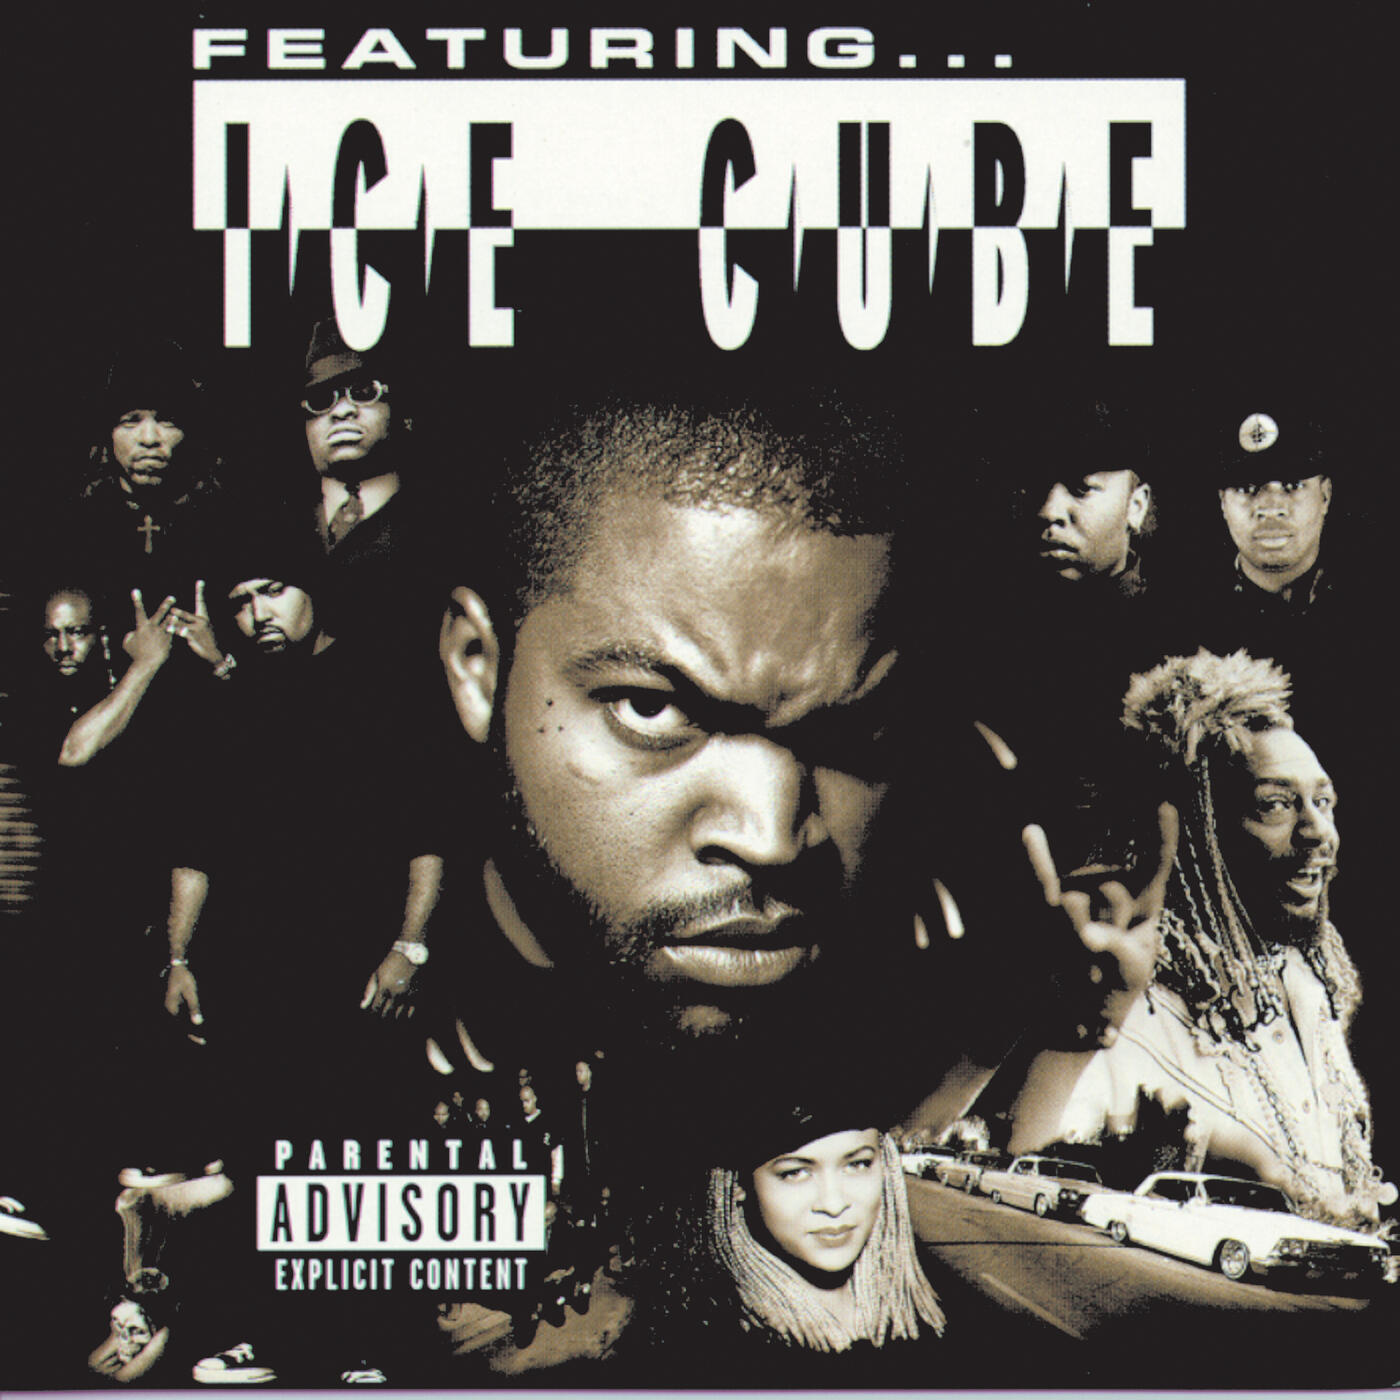 Ice cube me. Ice Cube. Ice Cube альбомы. Ice Cube обложка. Ice Cube обложки альбомов.